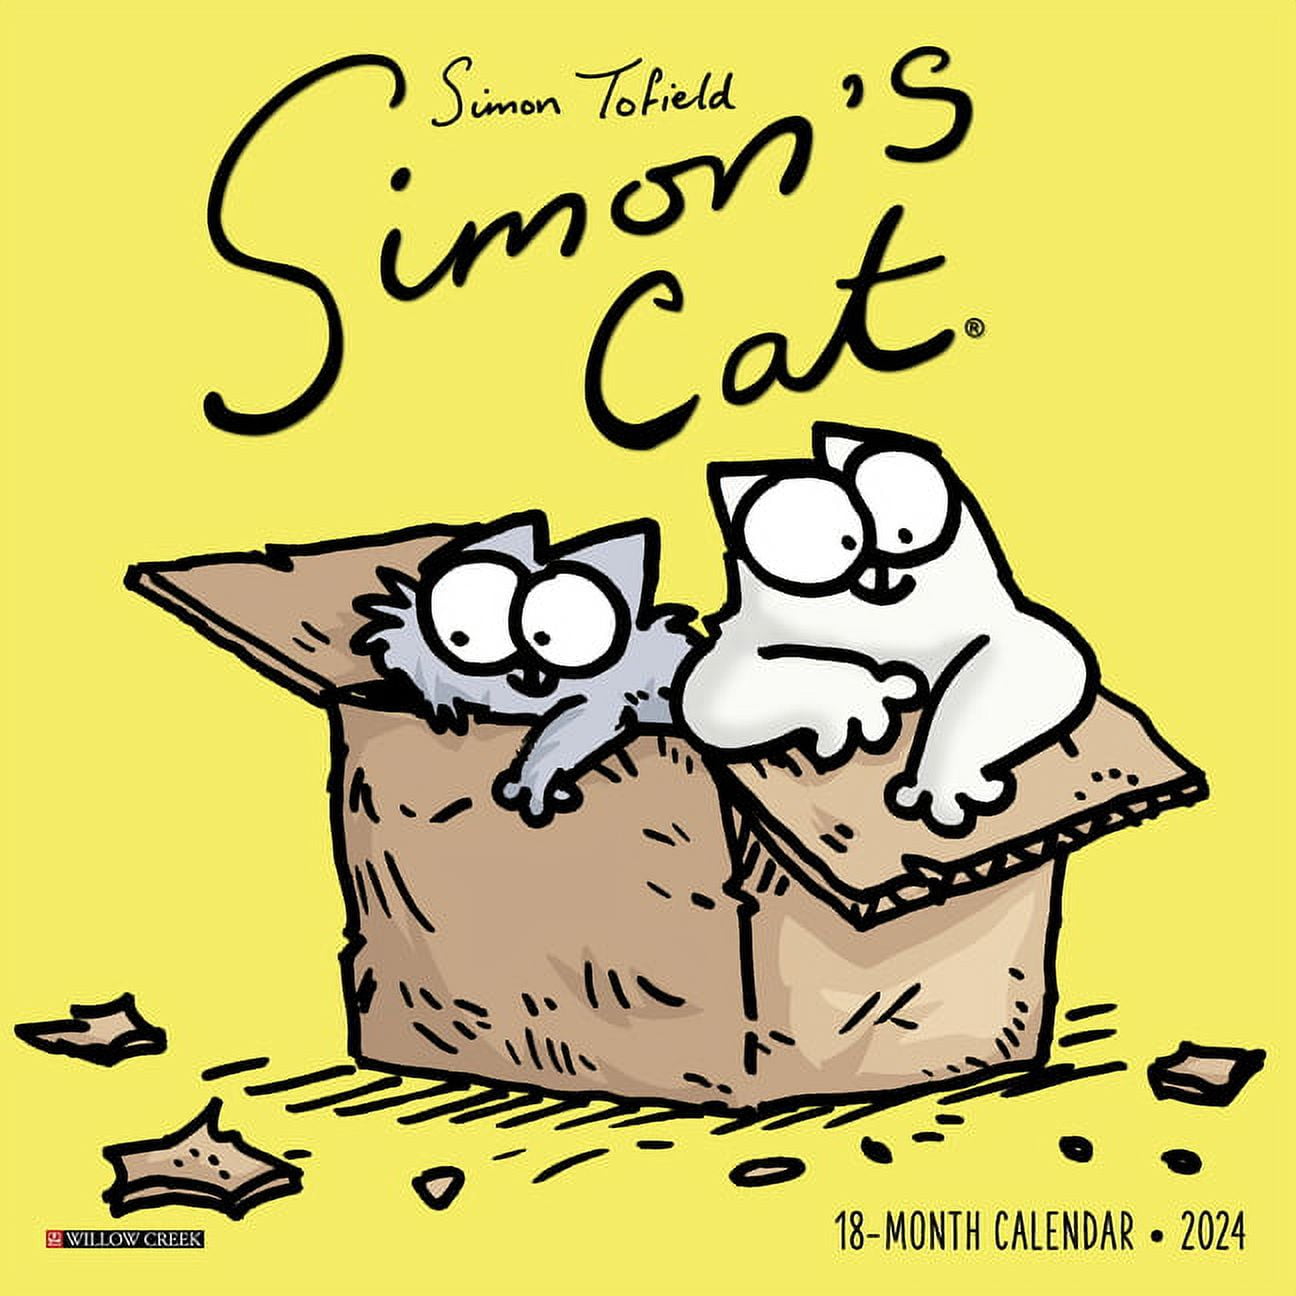 Simon's Cat